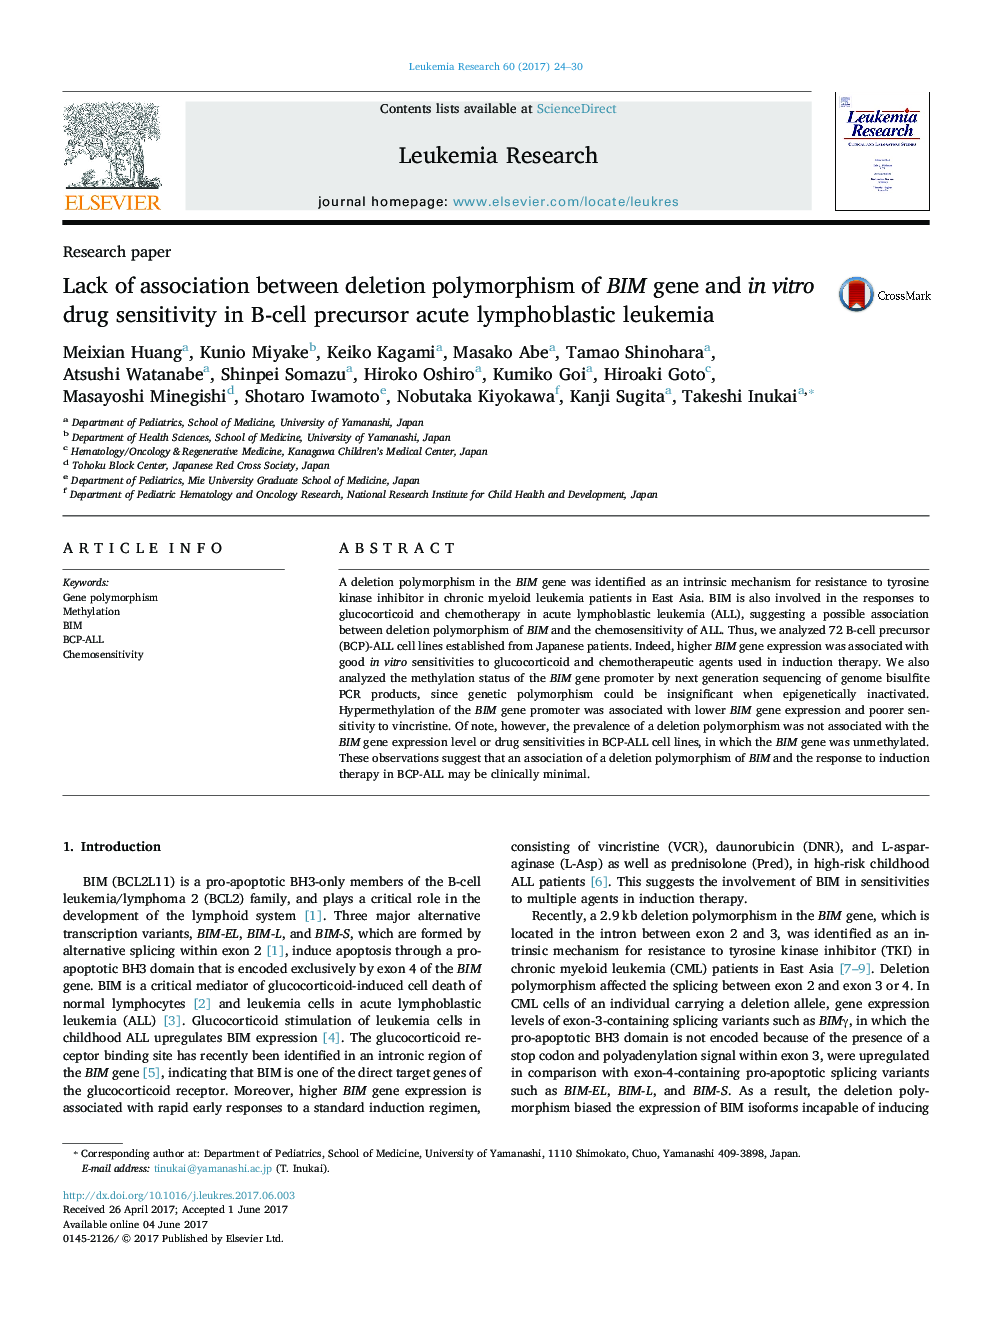 Research paperLack of association between deletion polymorphism of BIM gene and in vitro drug sensitivity in B-cell precursor acute lymphoblastic leukemia